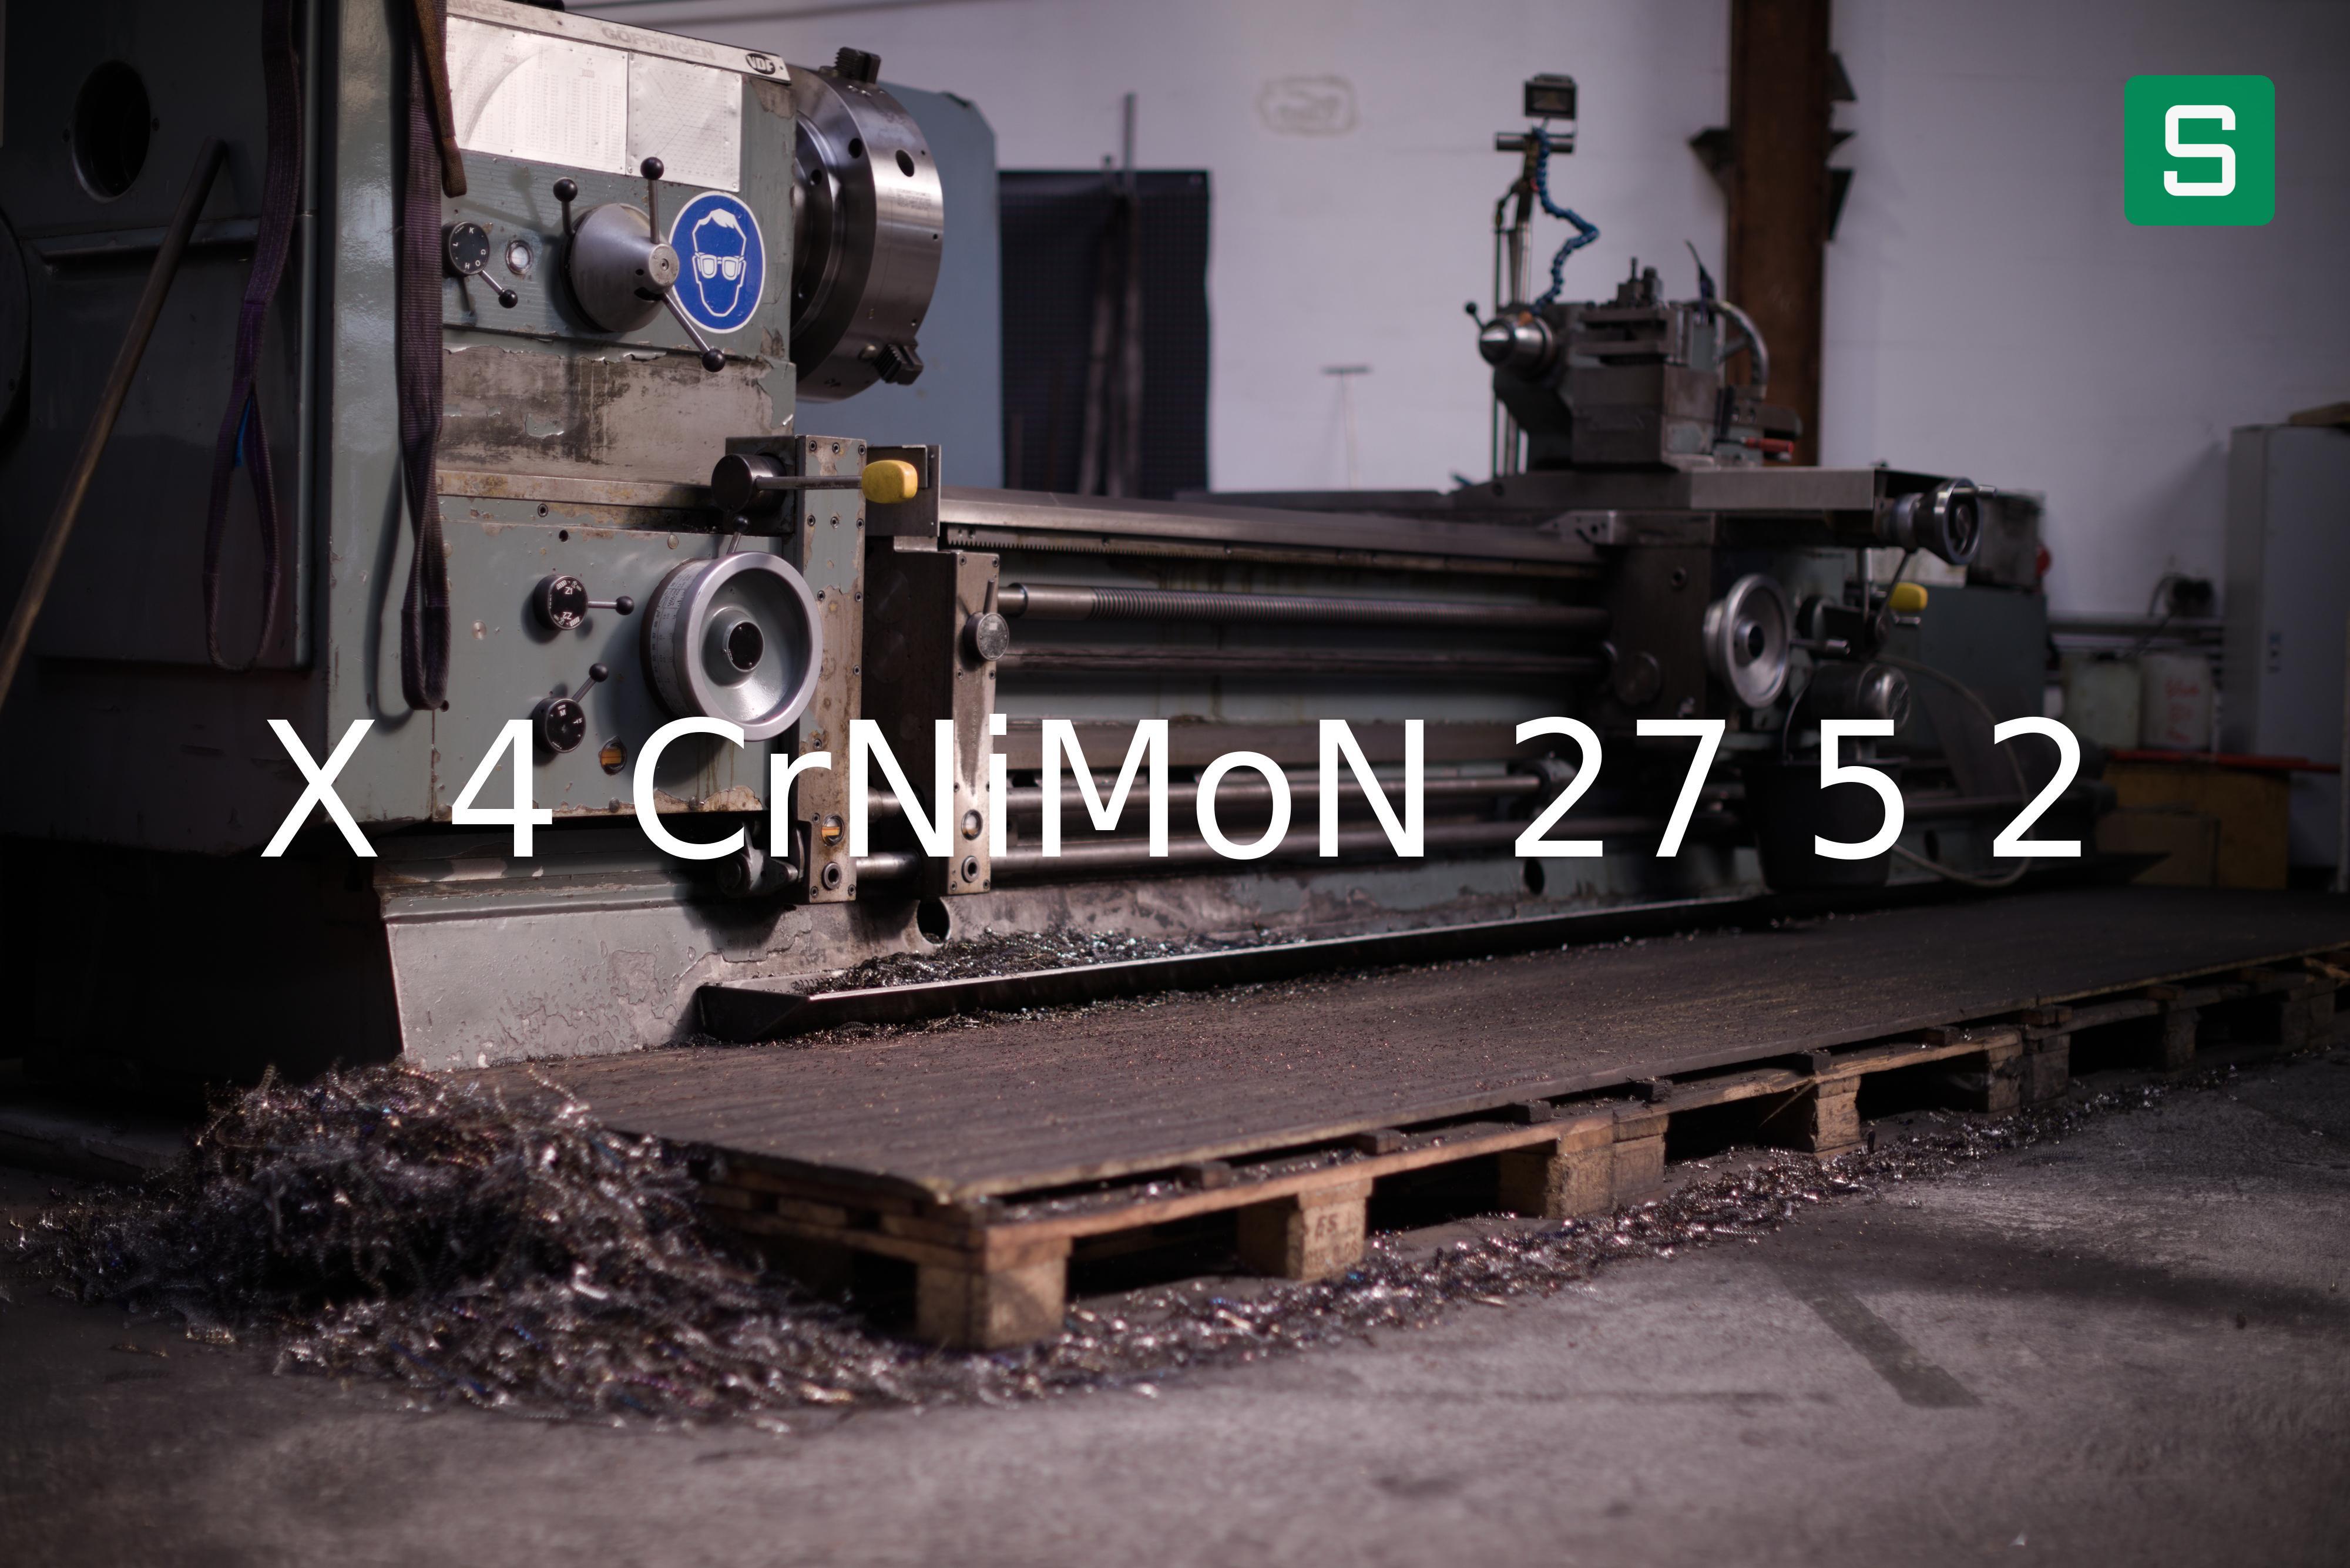 Steel Material: X 4 CrNiMoN 27 5 2